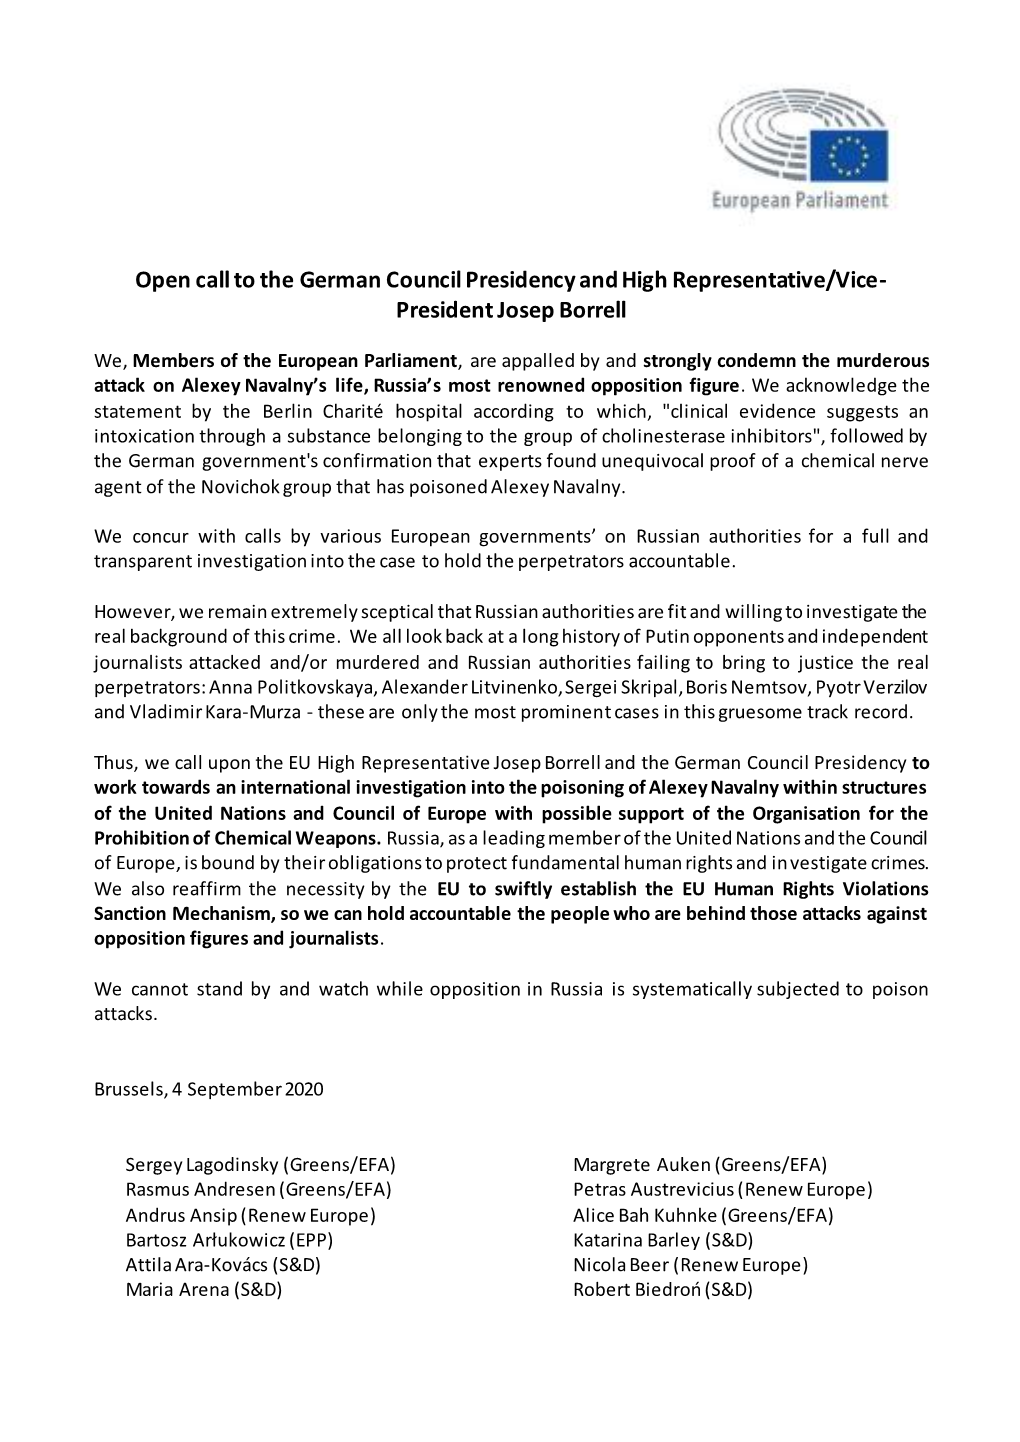 Open Call to the German Council Presidency and High Representative/Vice- President Josep Borrell